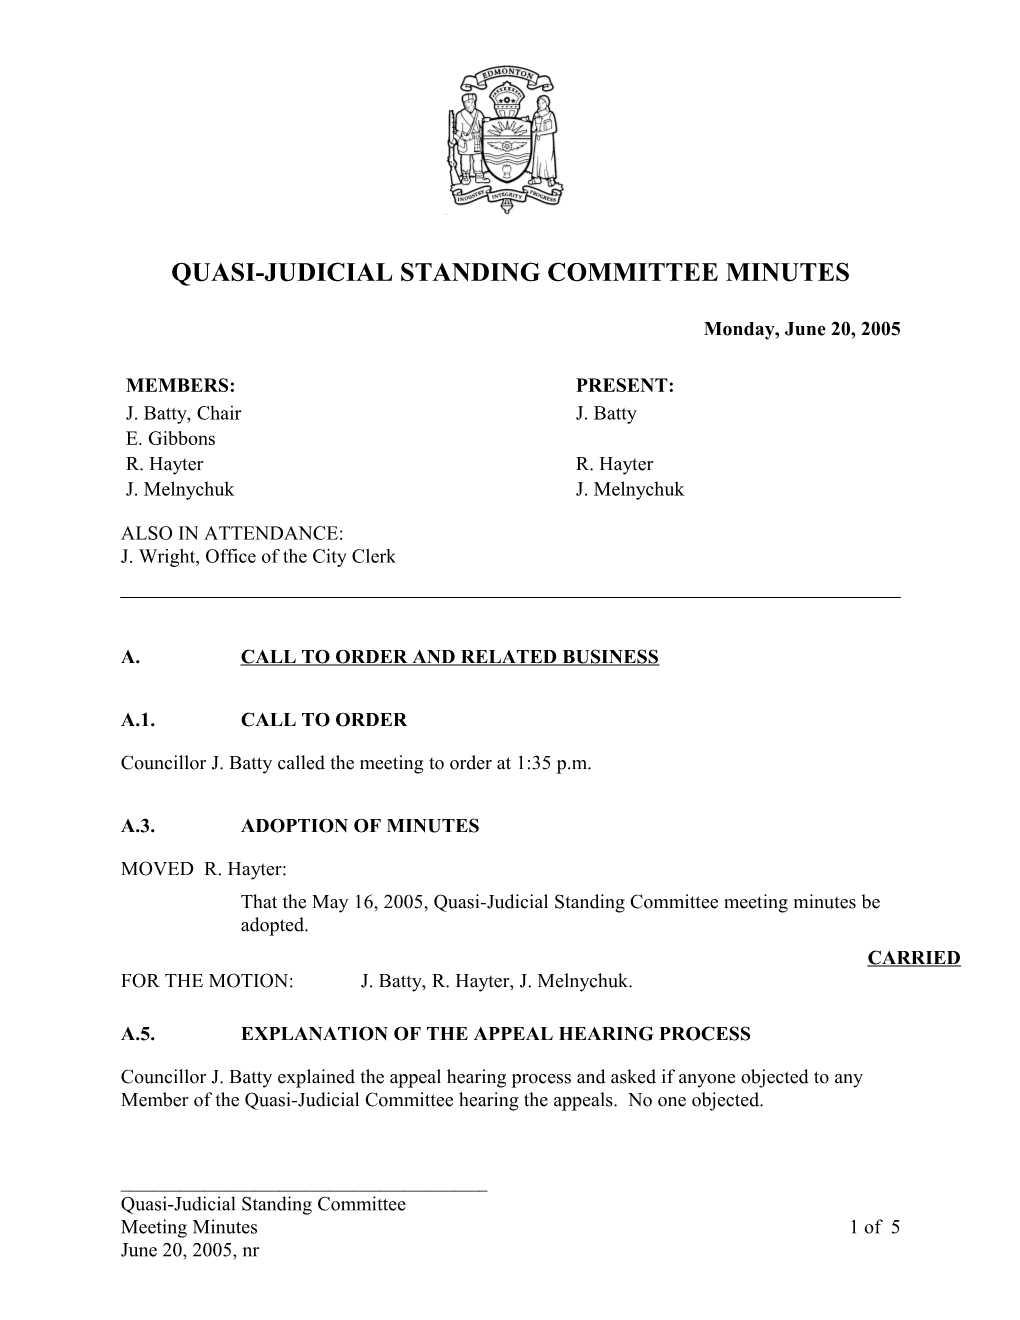 Minutes for Quasi-Judicial Standing Committee June 20, 2005 Meeting